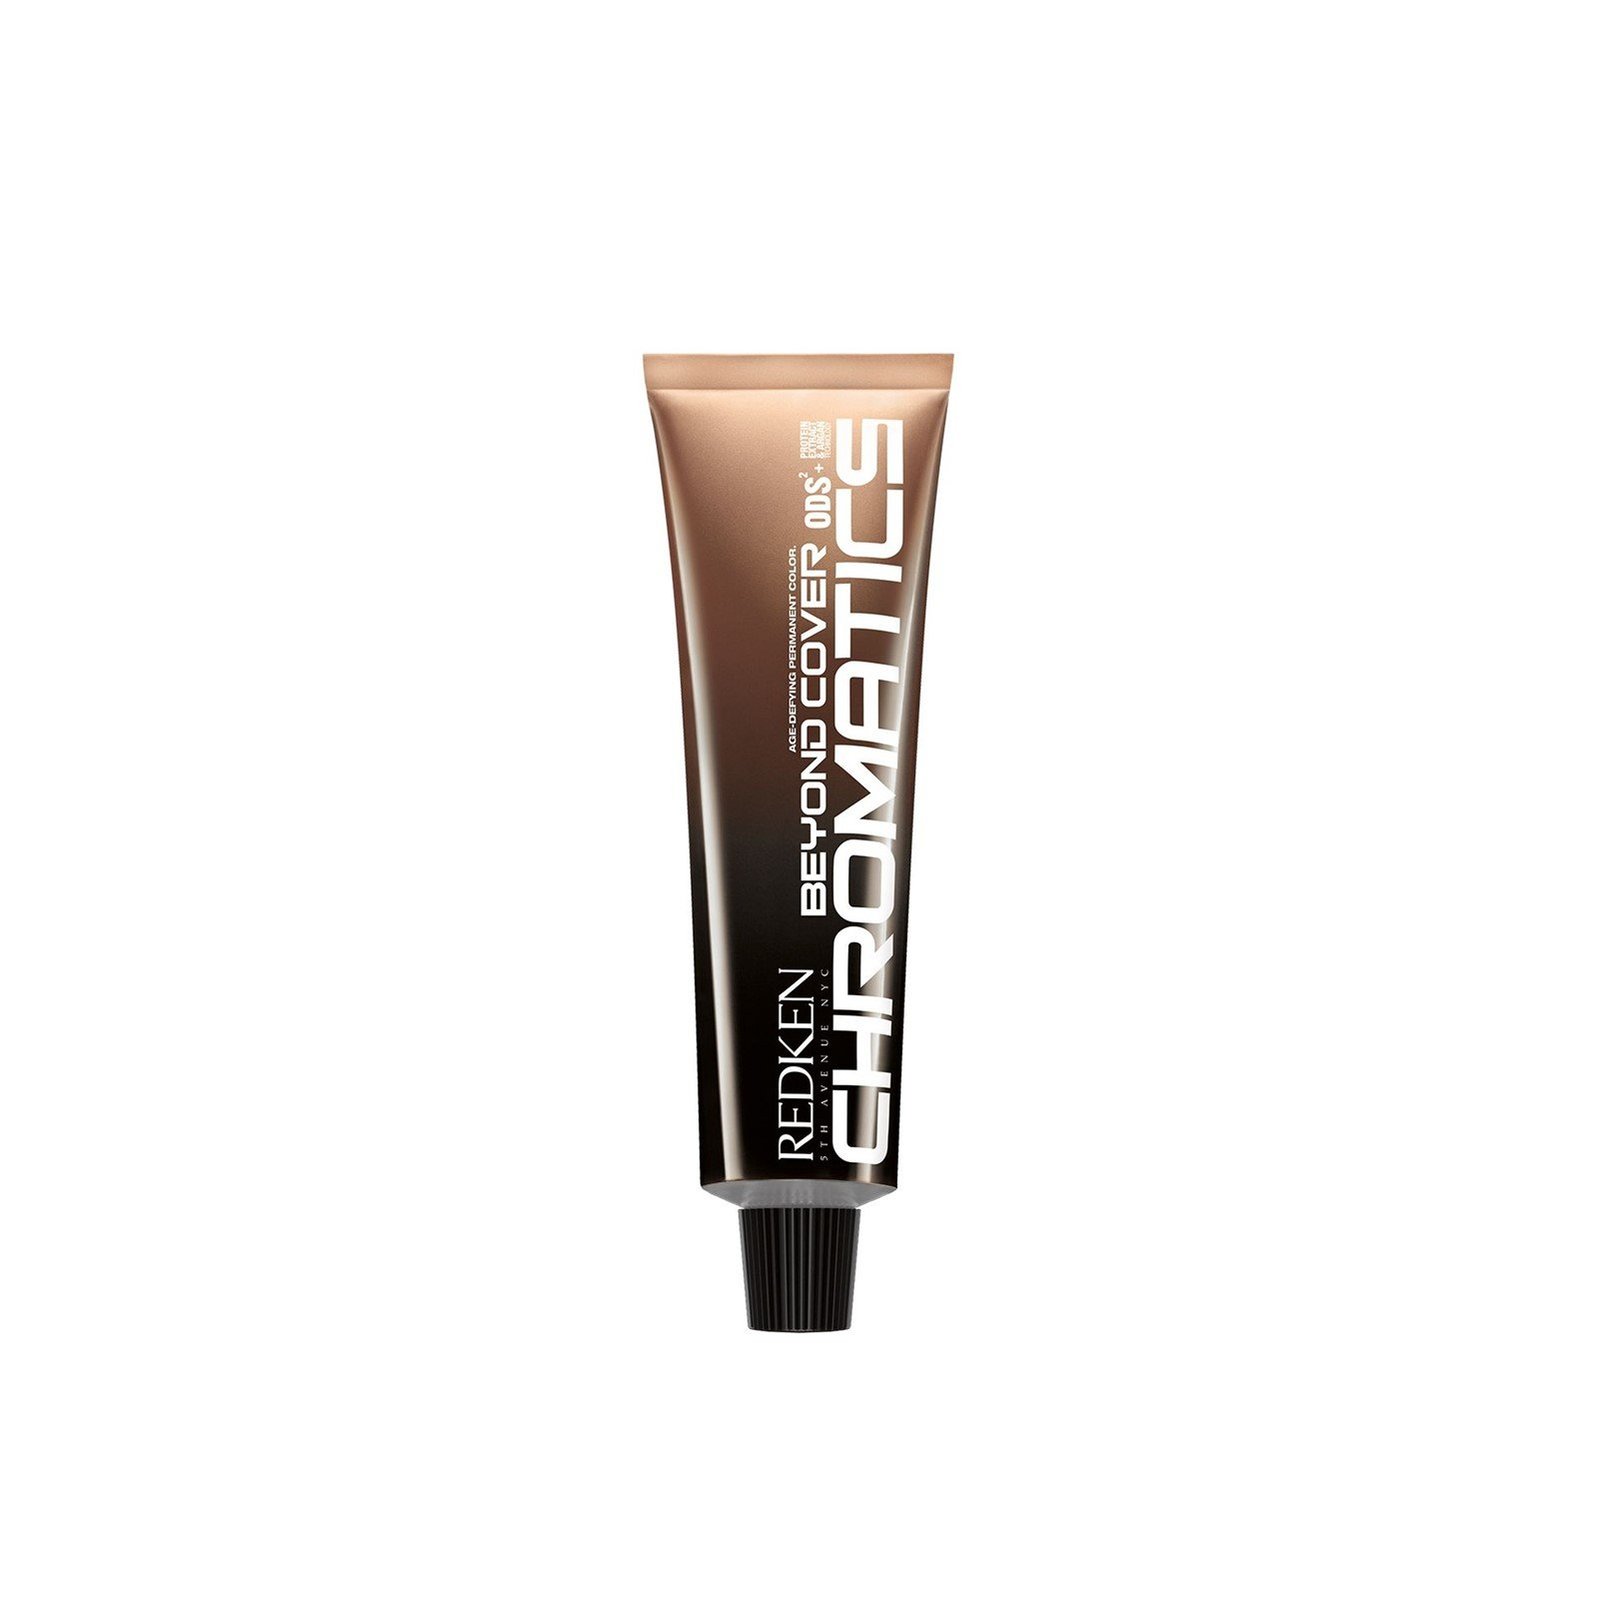 Redken Chromatics Beyond Cover Permanent Hair Dye 8GI Gold Iridescent 56.7g (2 oz)